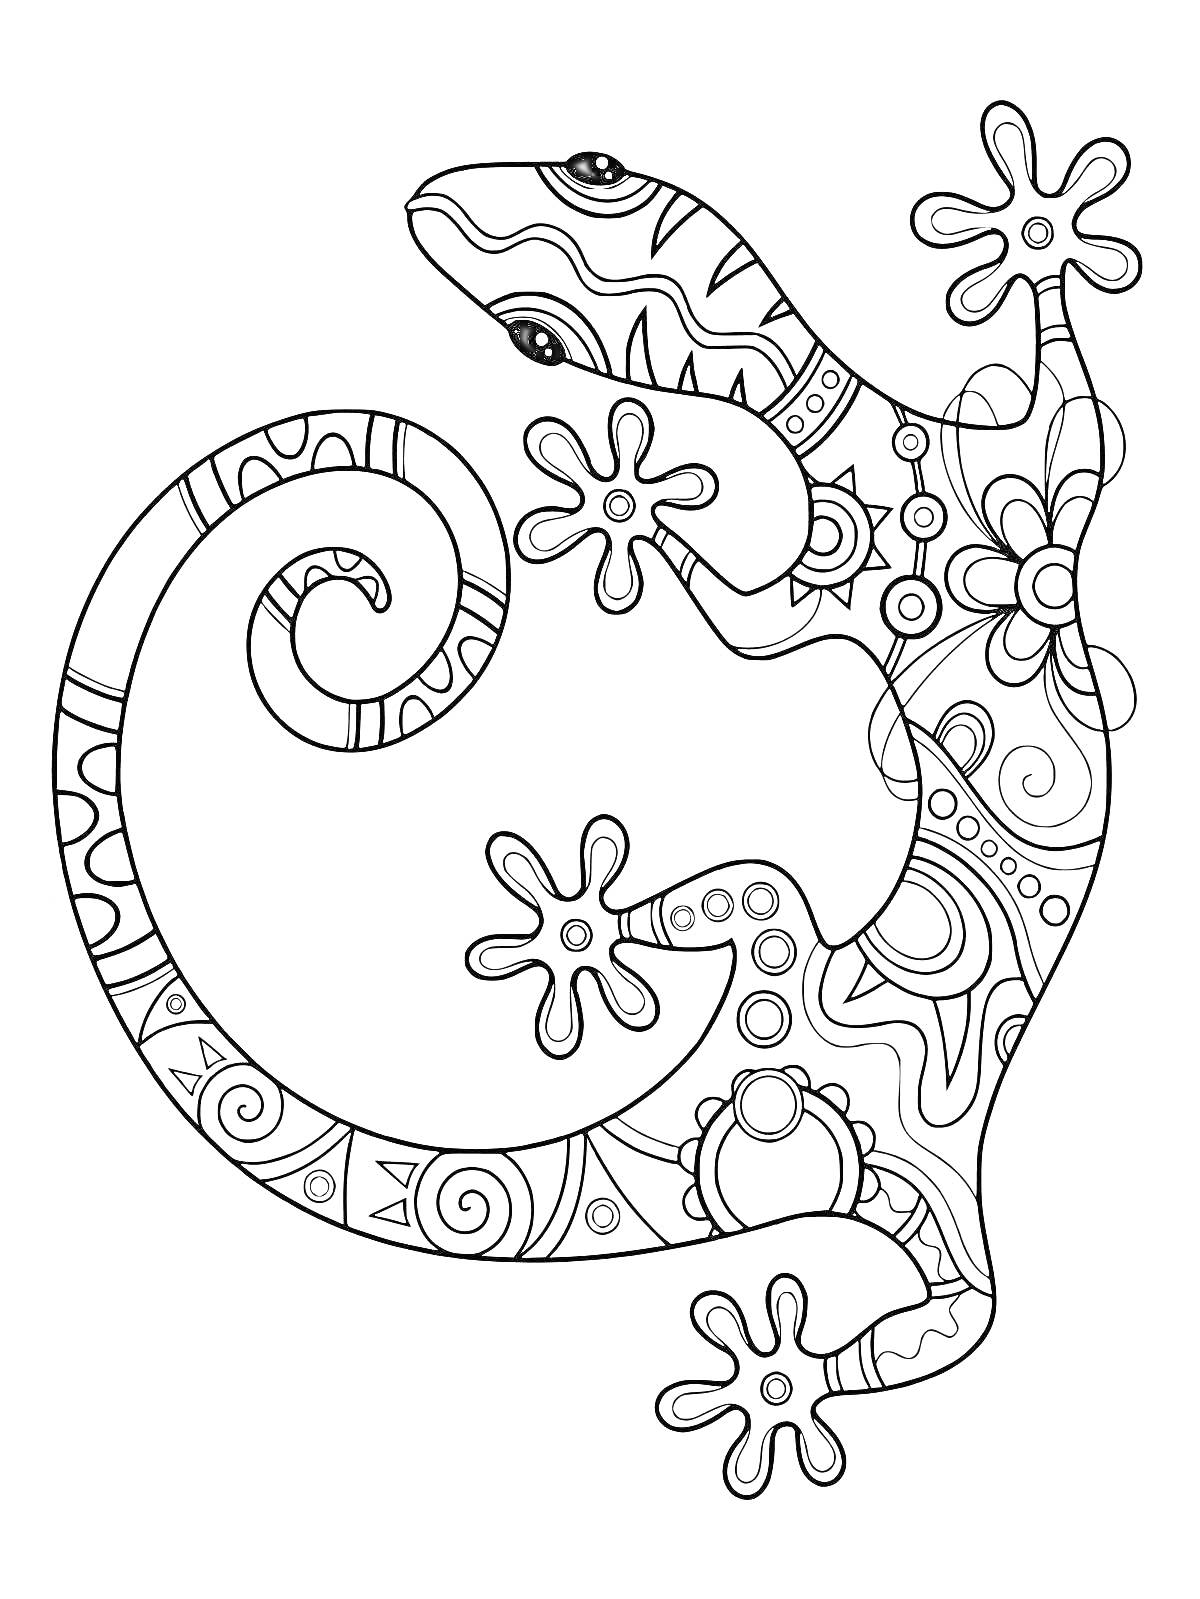 Раскраска Ящерица с узорами и цветами